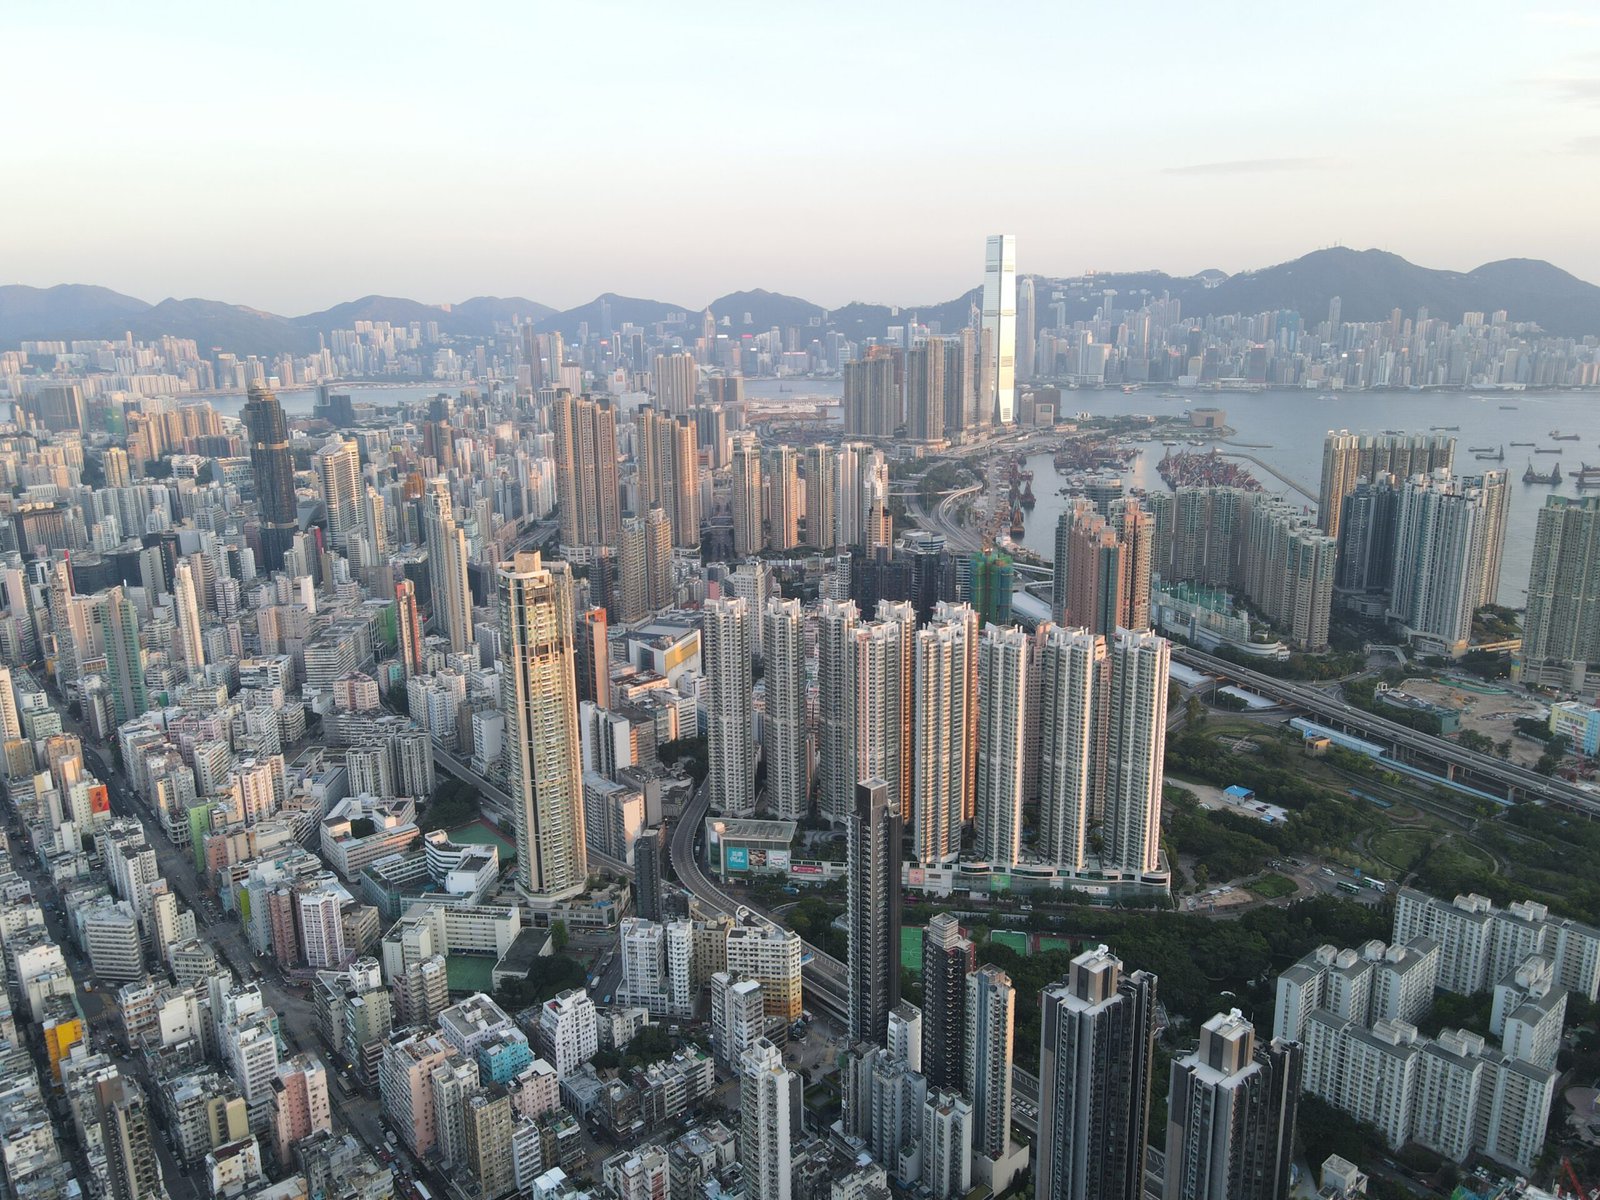 A drone view of Hong Kong